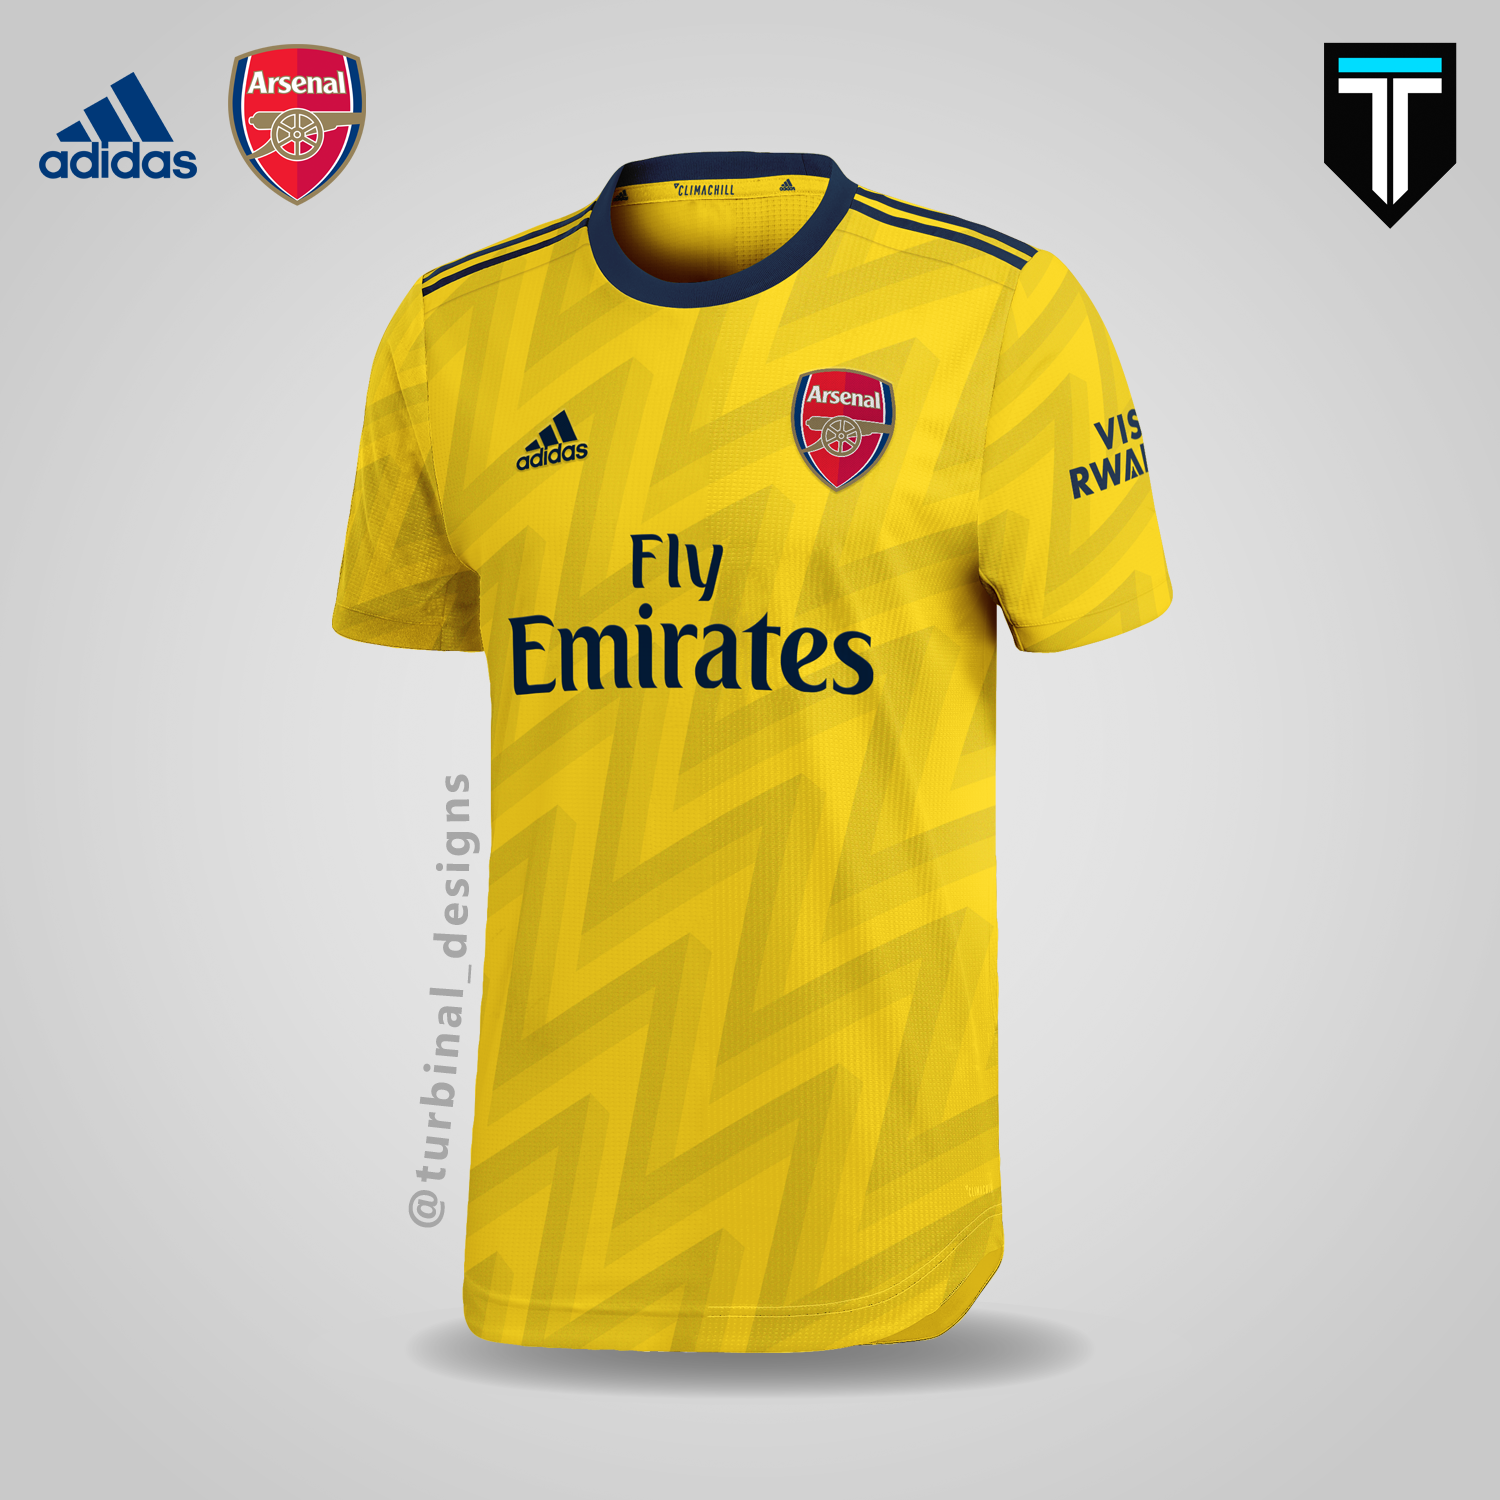 Arsenal x Adidas - Away Kit 19/20